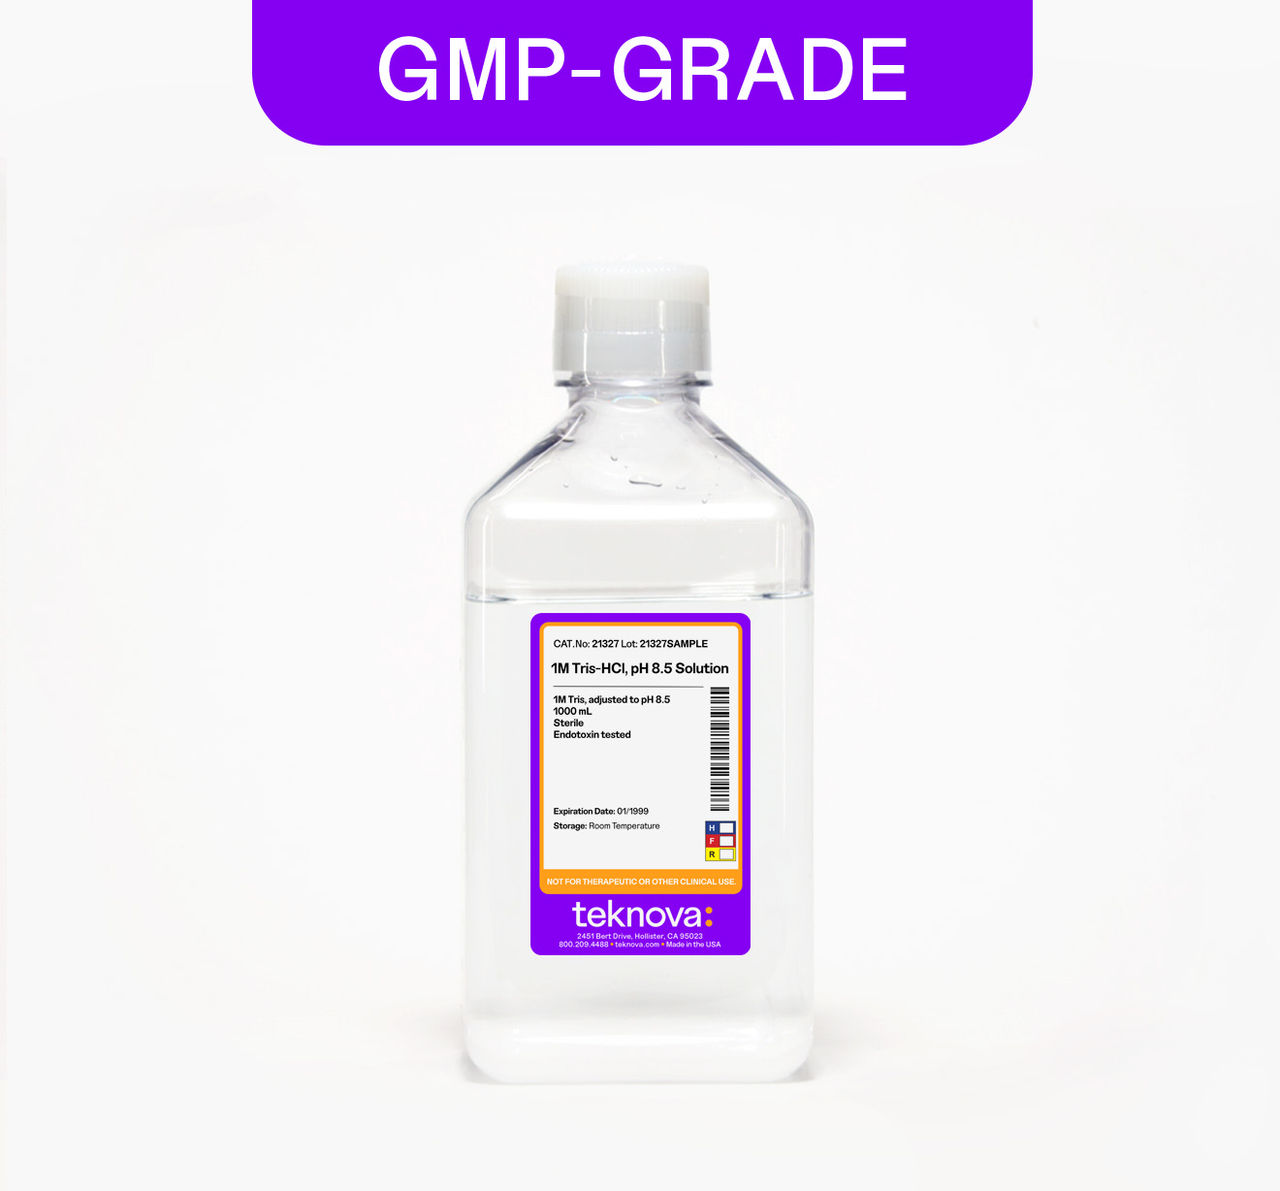 1M Tris-HCl, pH 8.5 Solution, 1000mL, GMP-grade